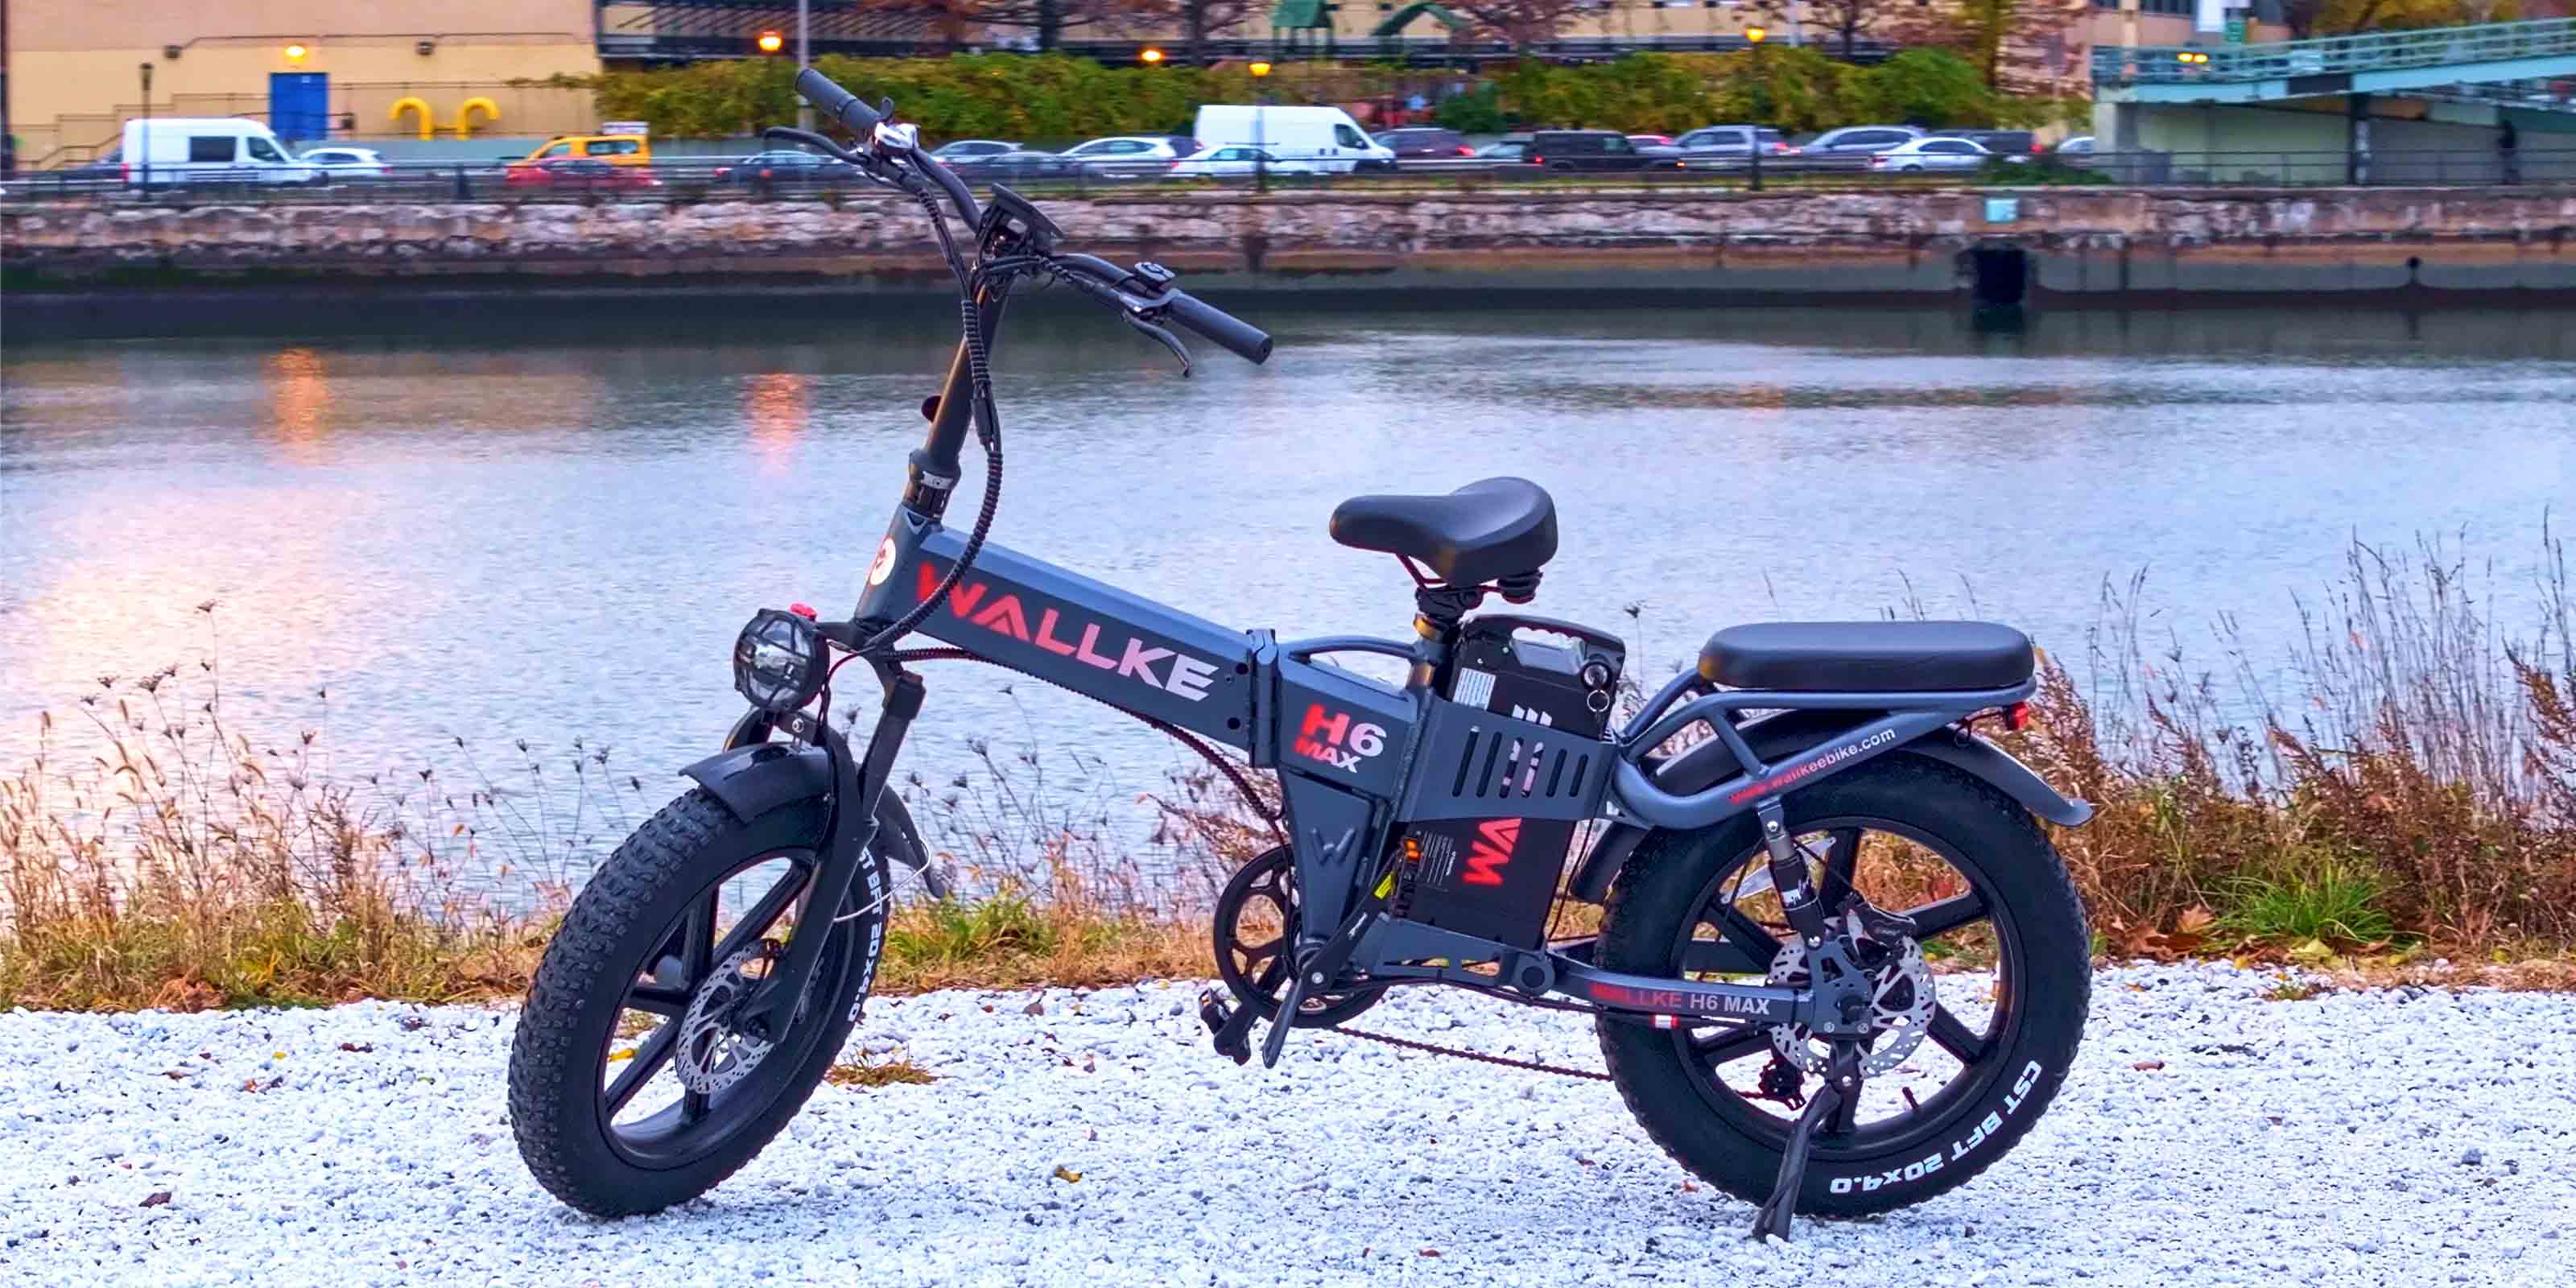 Wallke H6 review: A folding 30 mph moped-style electric bike